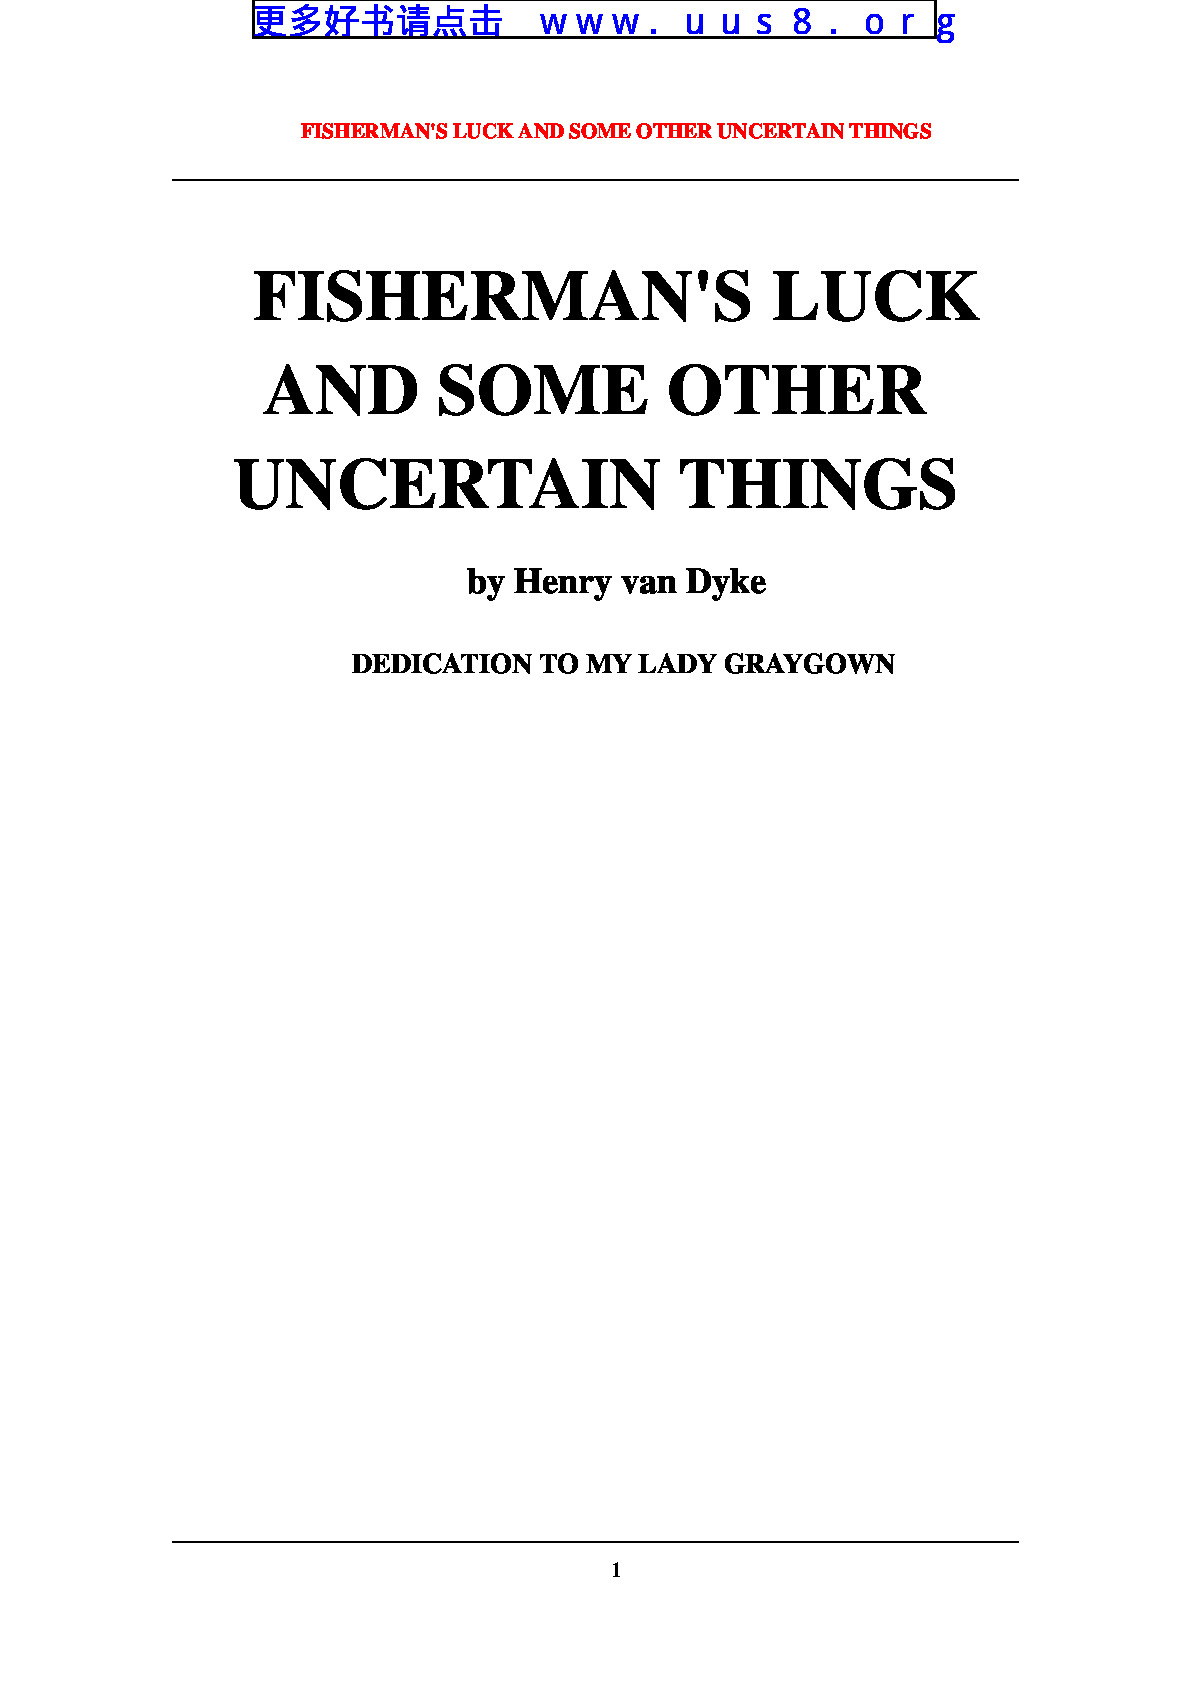 FISHERMAN’S_LUCK(渔夫的幸运)